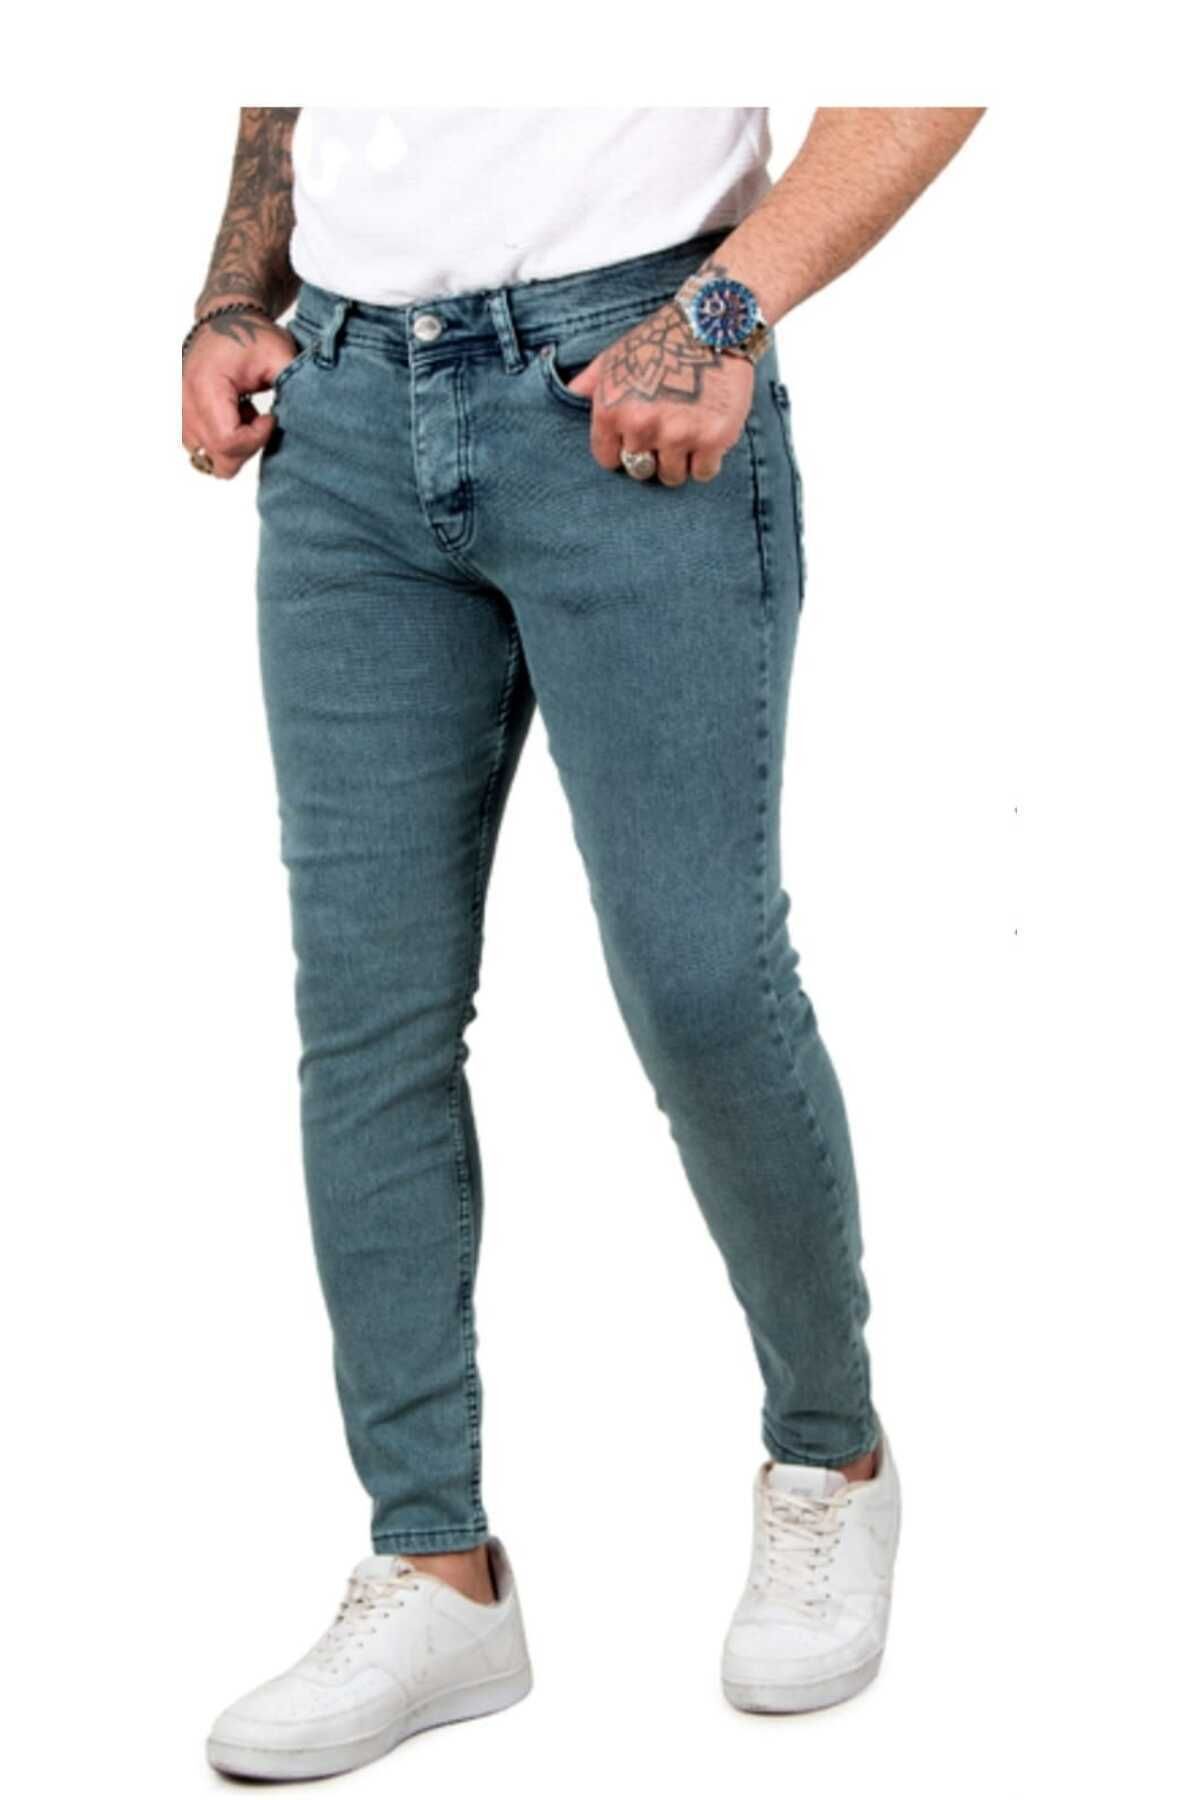 Avcı Slim Fit Likralı Erkek Jeans Kot Pantalon